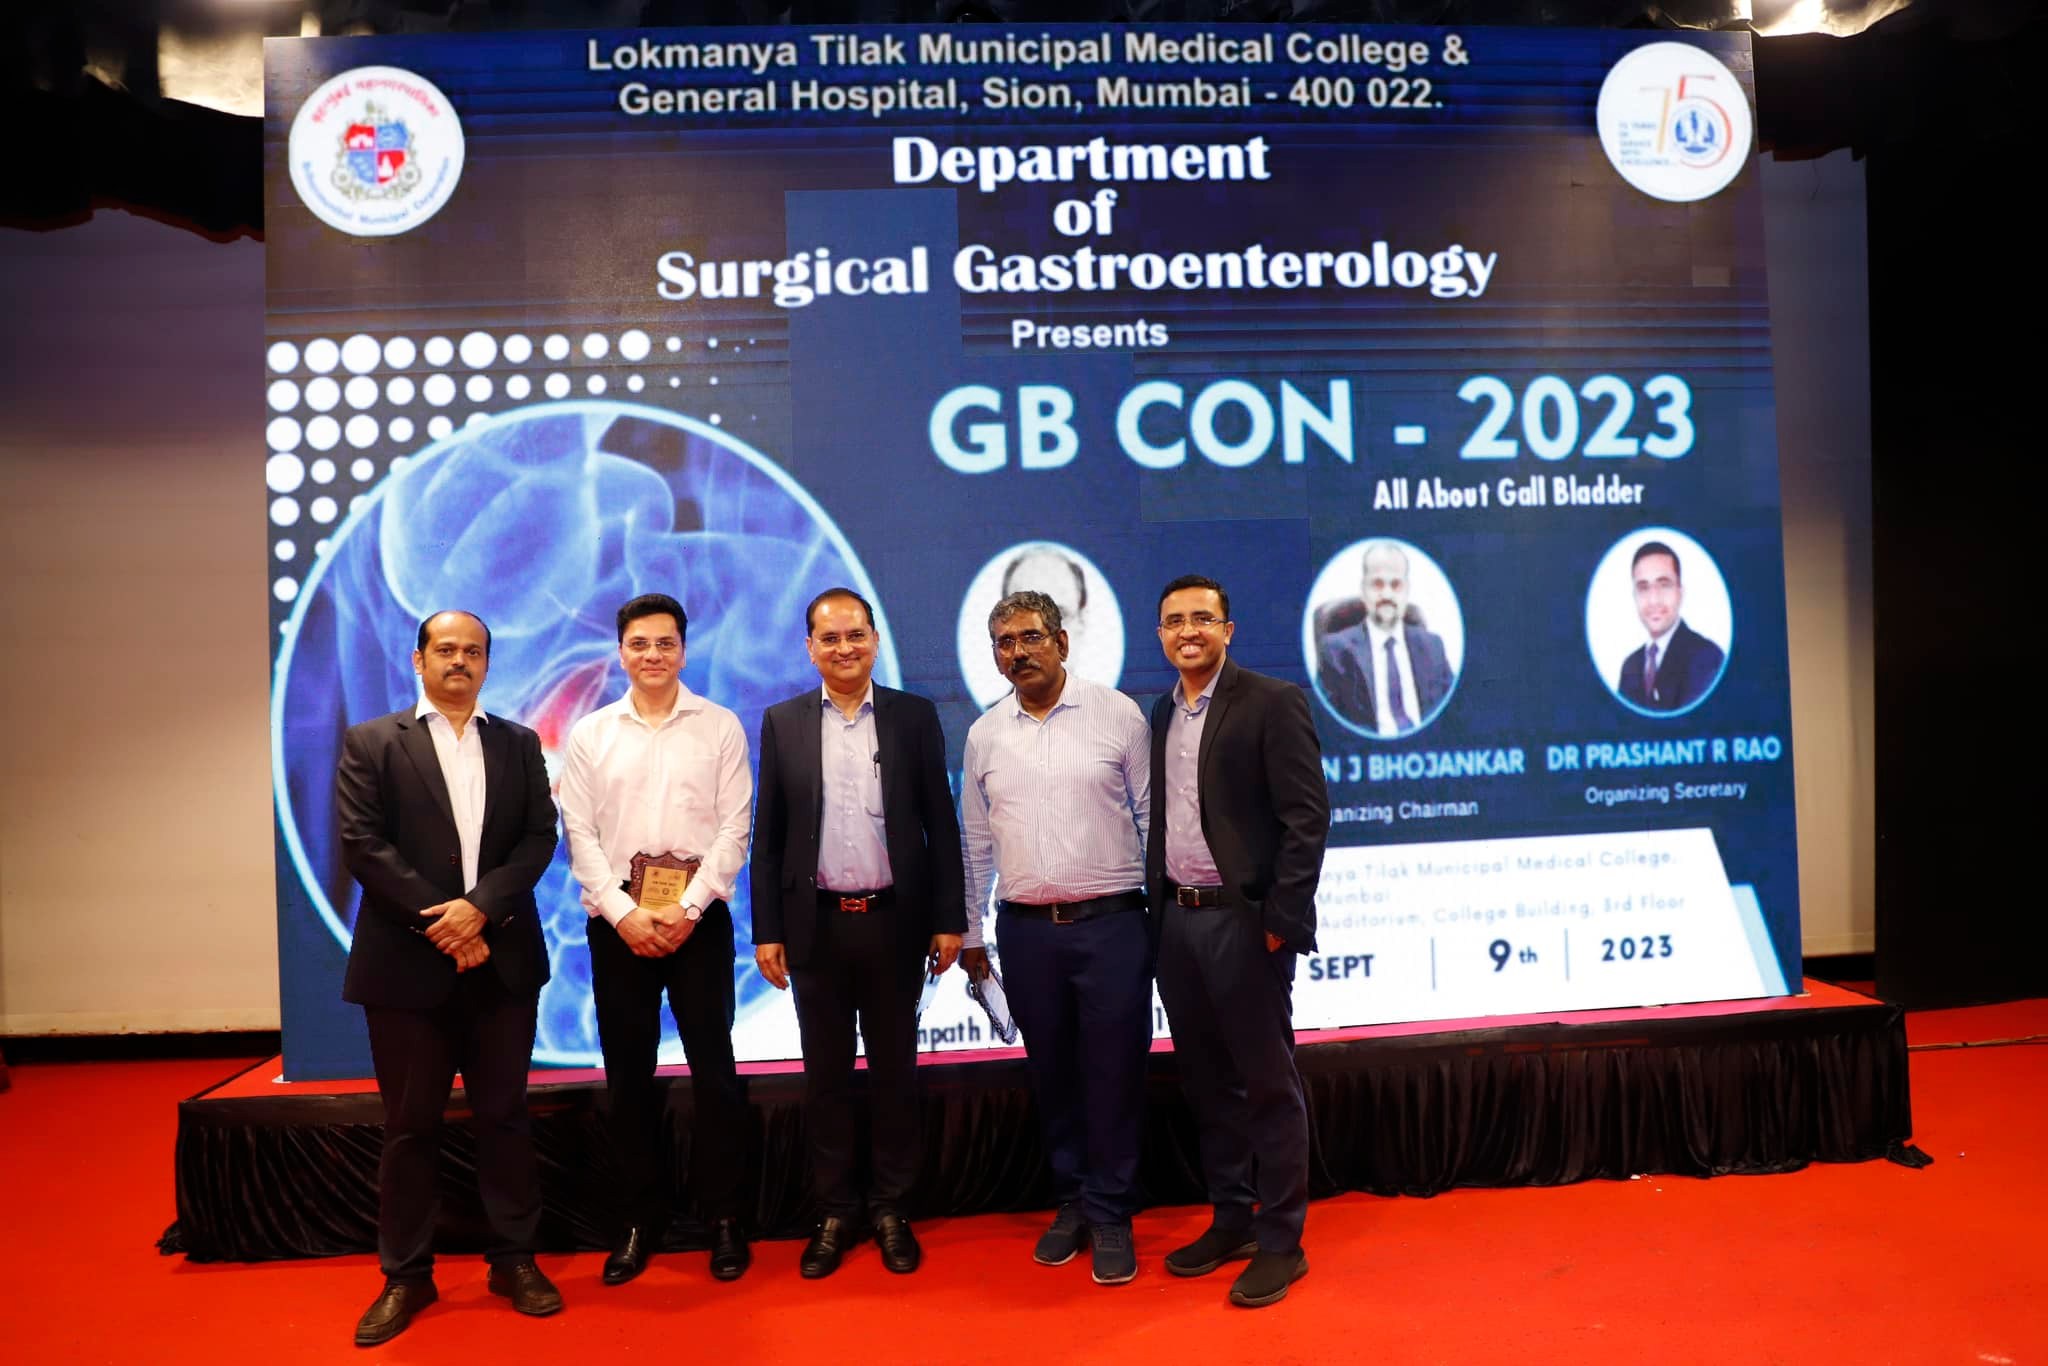 GBCON 23Dr Nitish Jhawar Gallbladder surgery conference